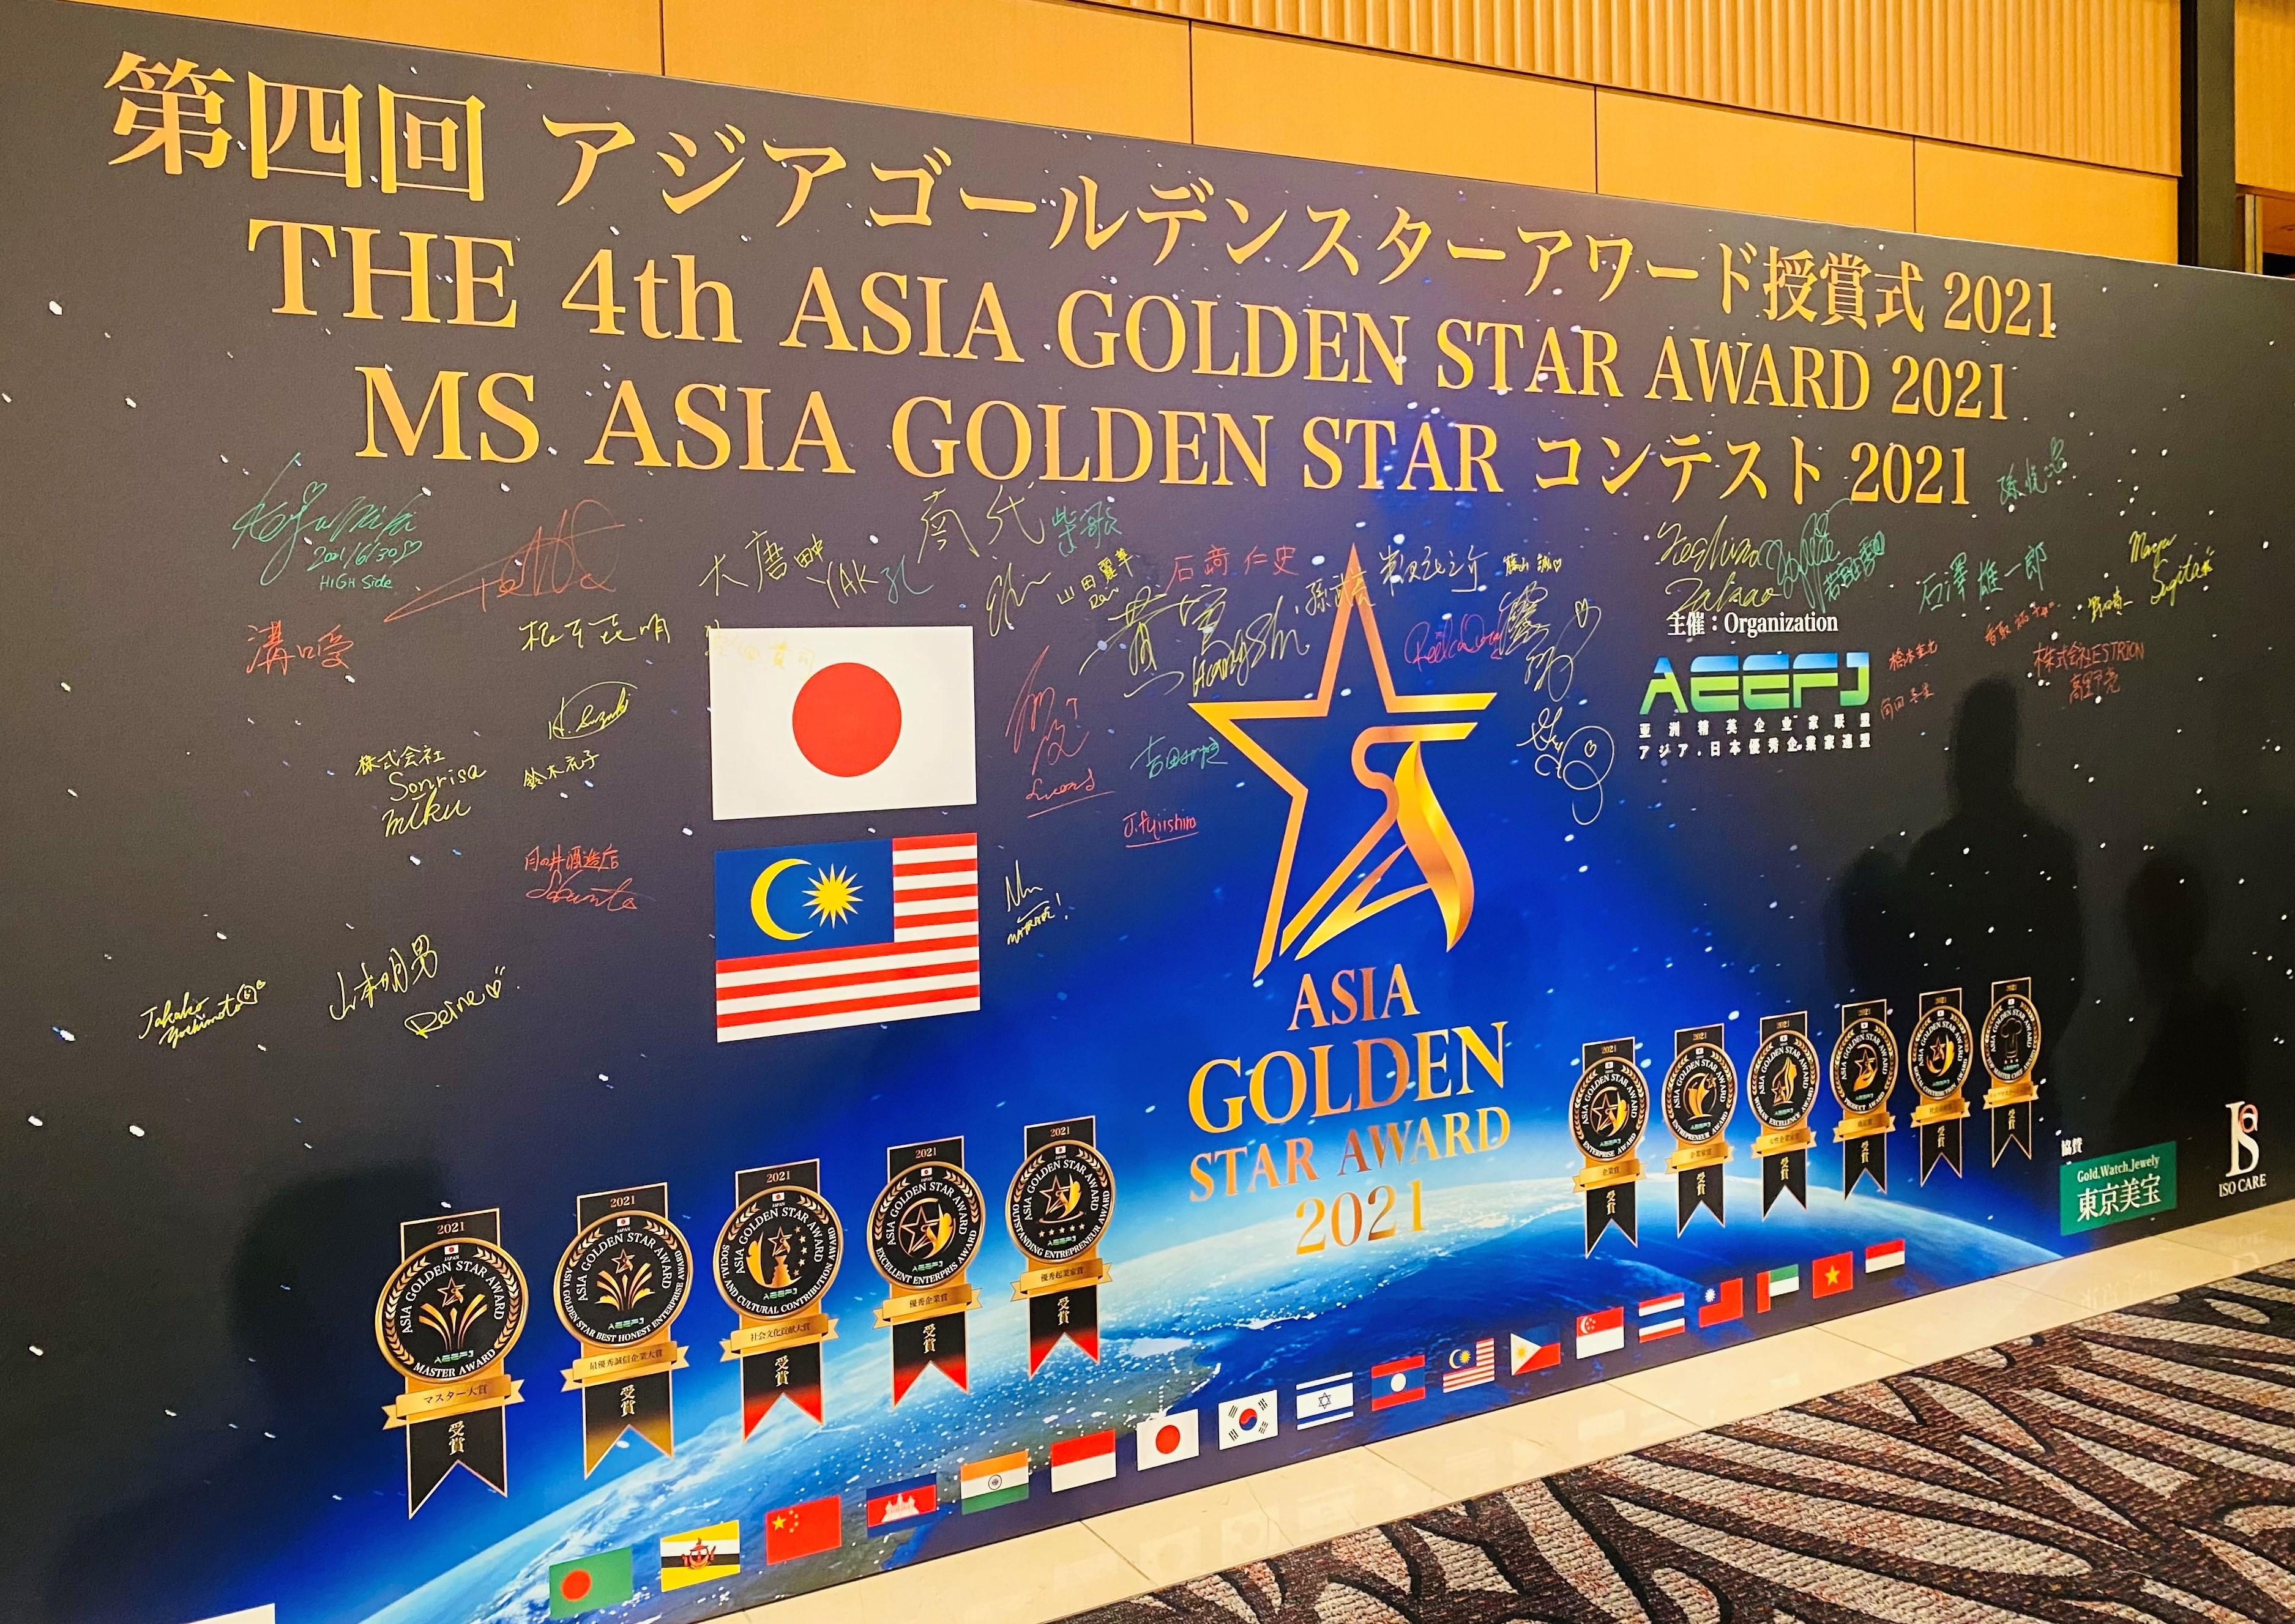 ASIA GOLDEN STAR AWARD܁@̔etuDr's Choice VC25v@